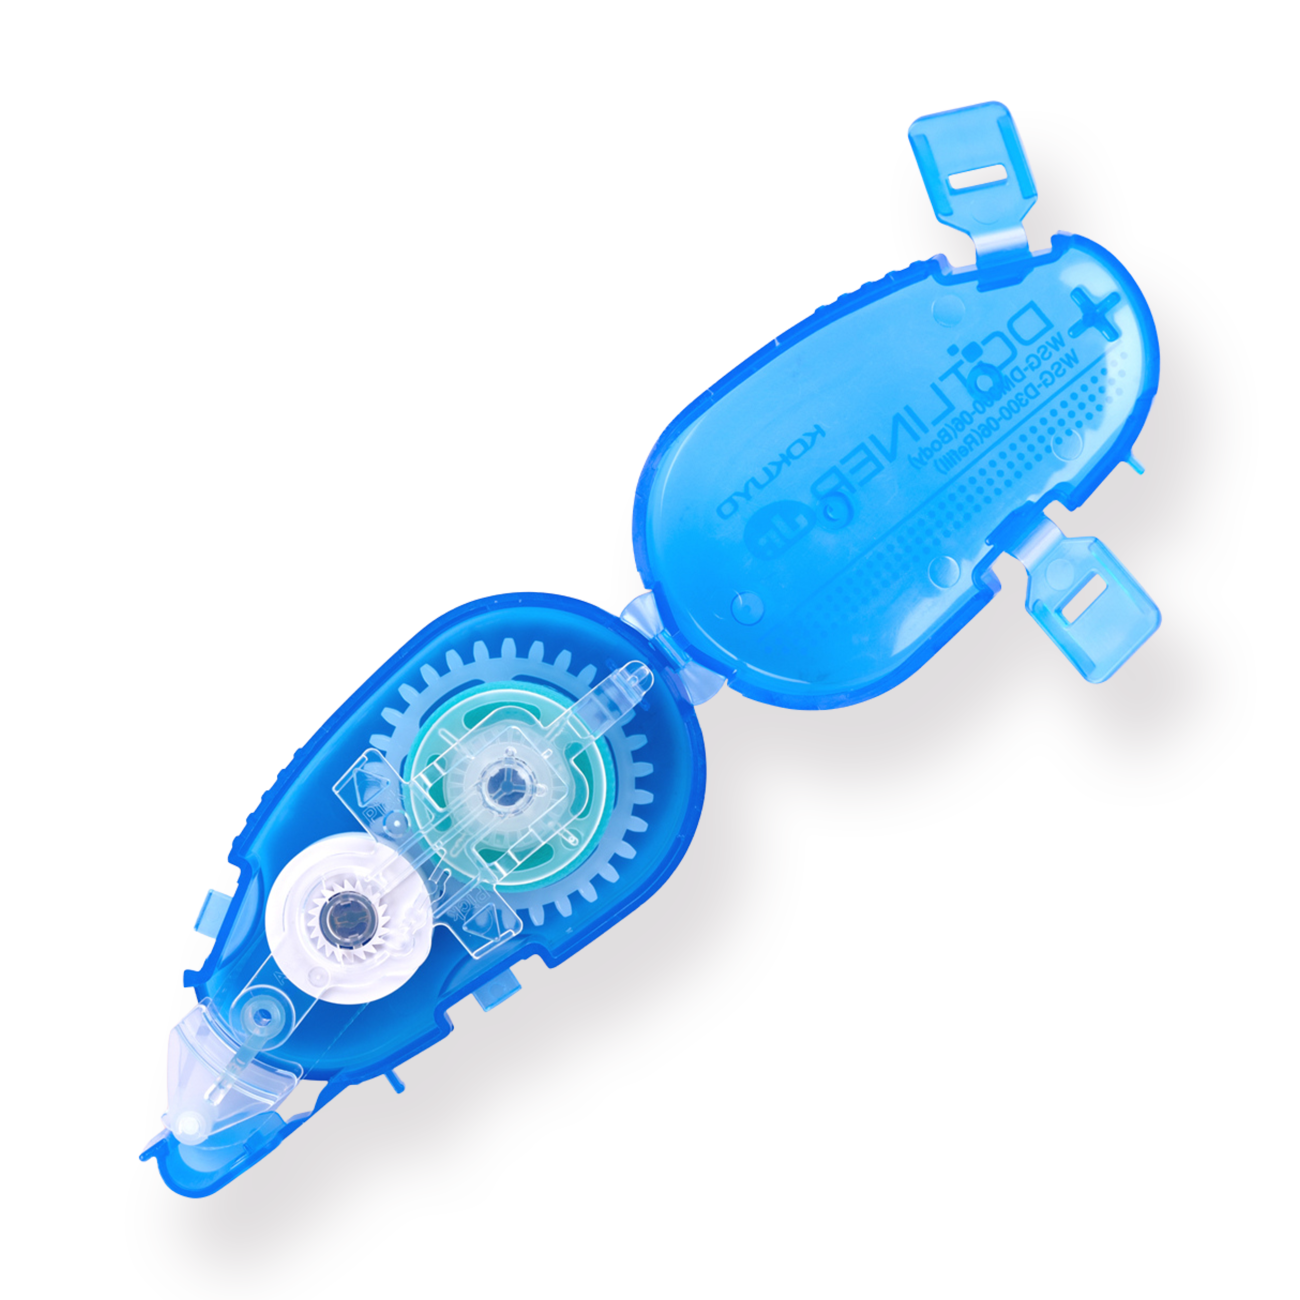 Kokuyo Dotliner Adhesive Glue Tape Roller - Blue